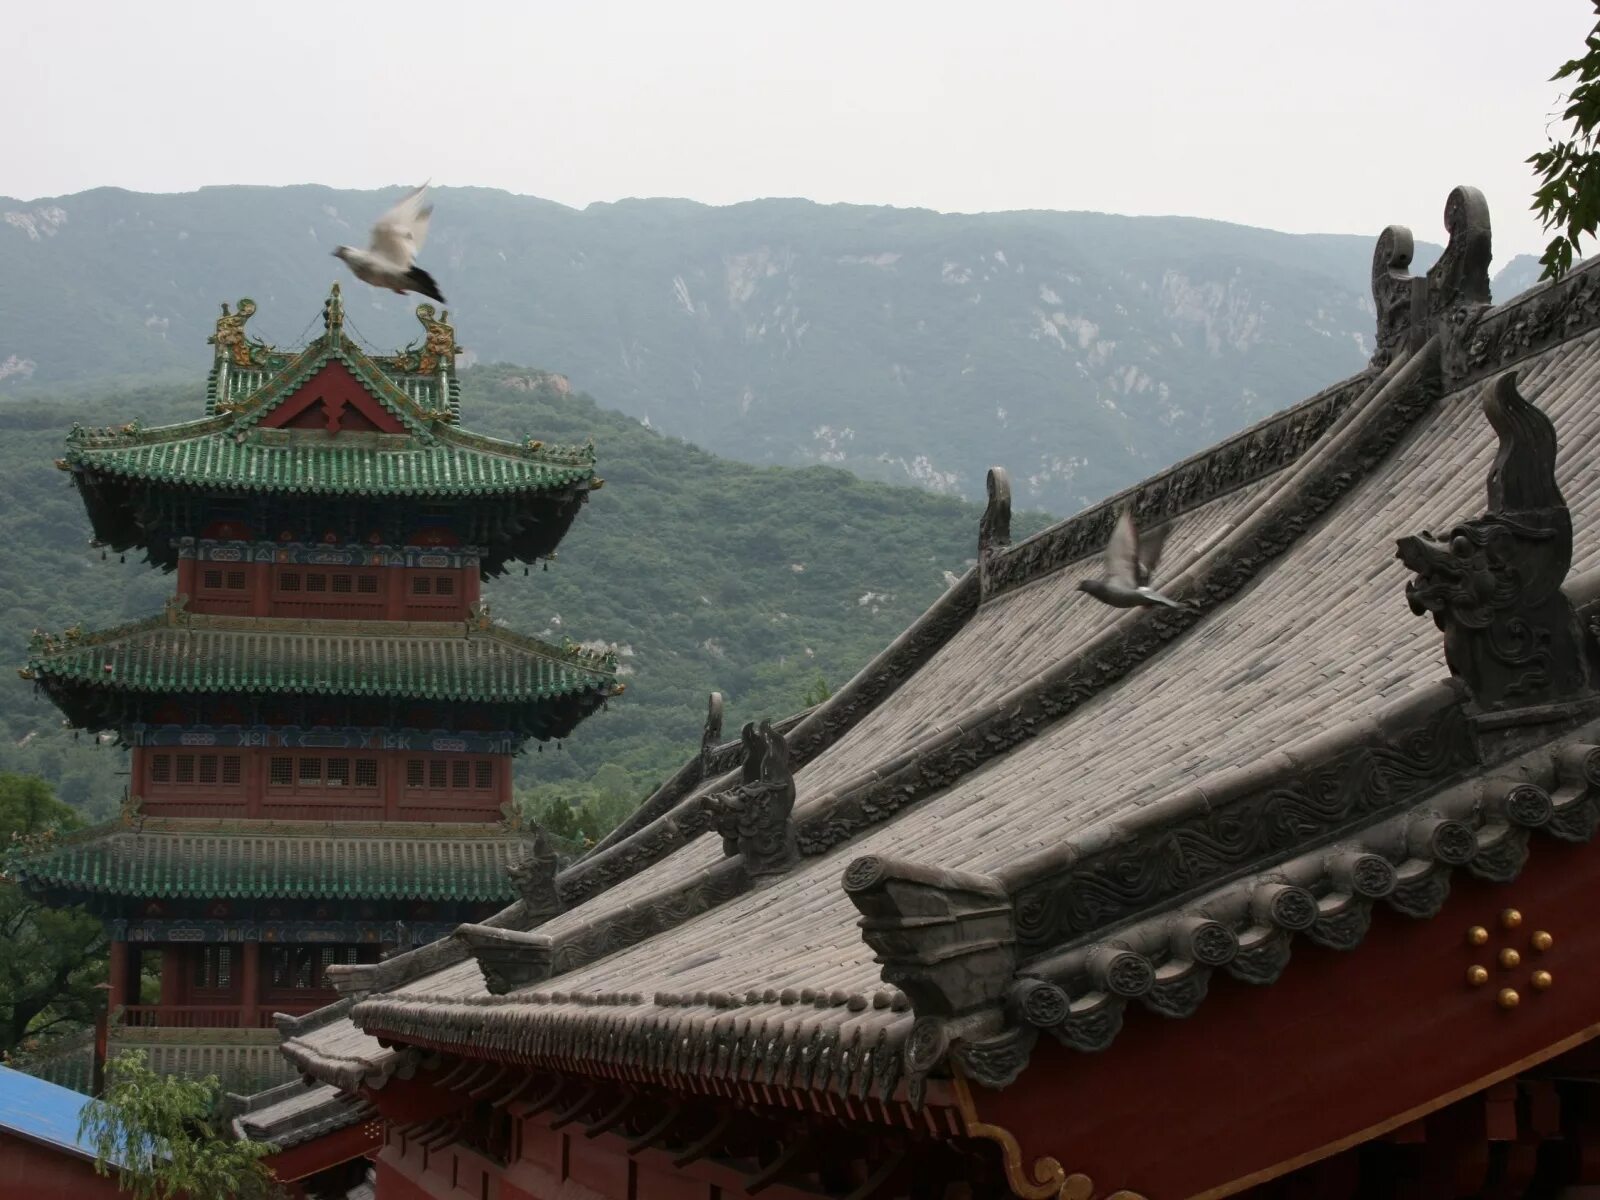 Shaolin temple. Китай храм Шаолинь. Монастырь Шаолинь Хэнань. Буддийский храм Шаолинь. Шаолиньский монастырь гора Суншань.